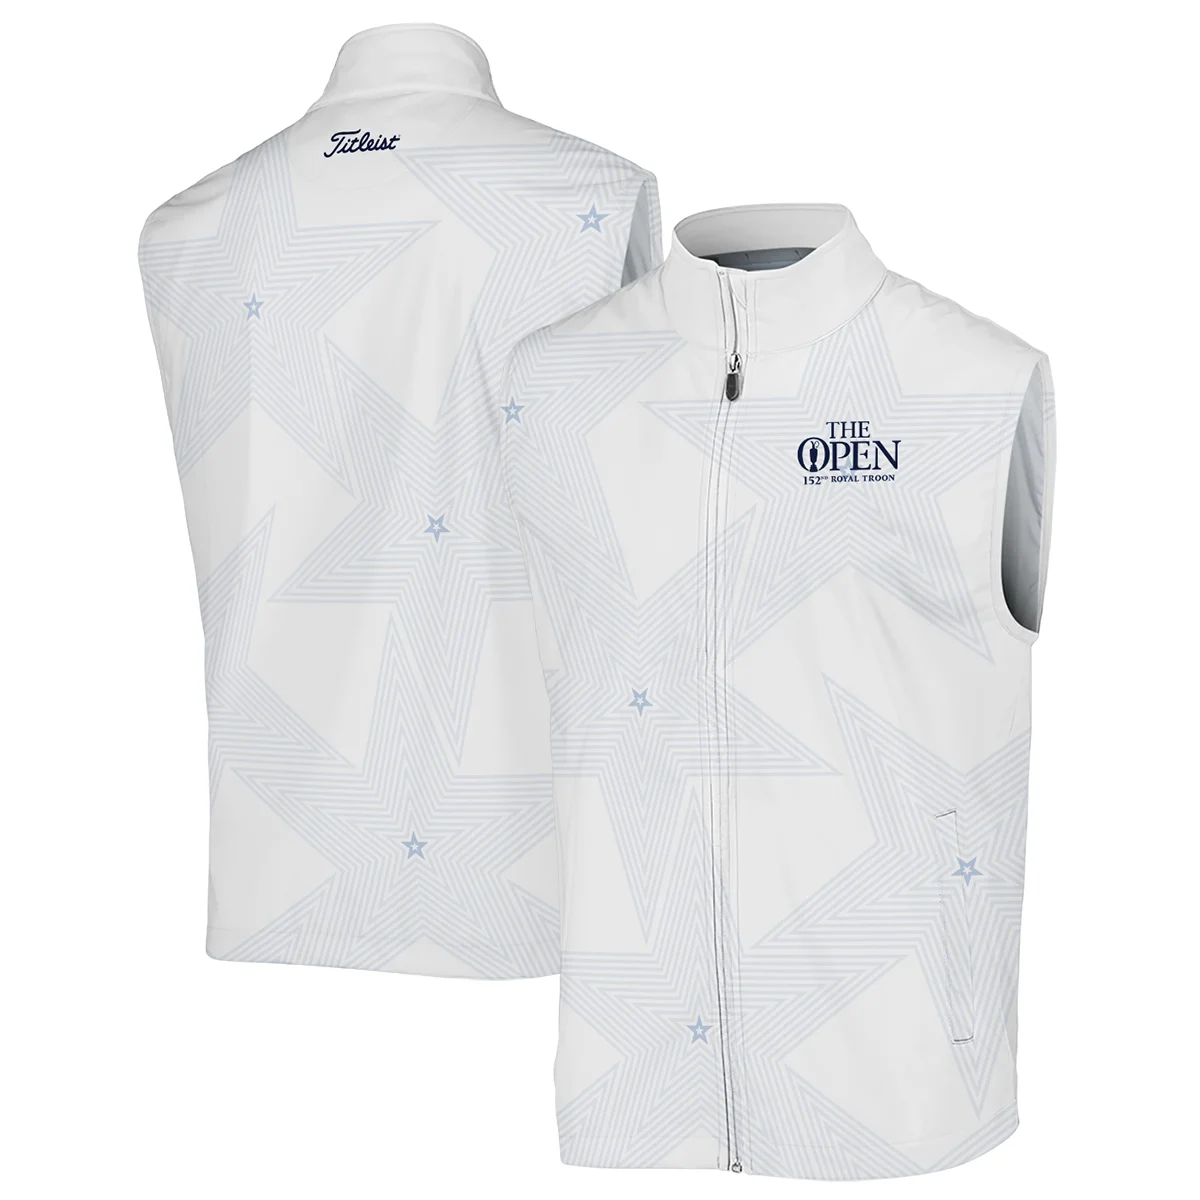 152nd The Open Championship Golf Titleist Sleeveless Jacket Stars White Navy Golf Sports All Over Print Sleeveless Jacket